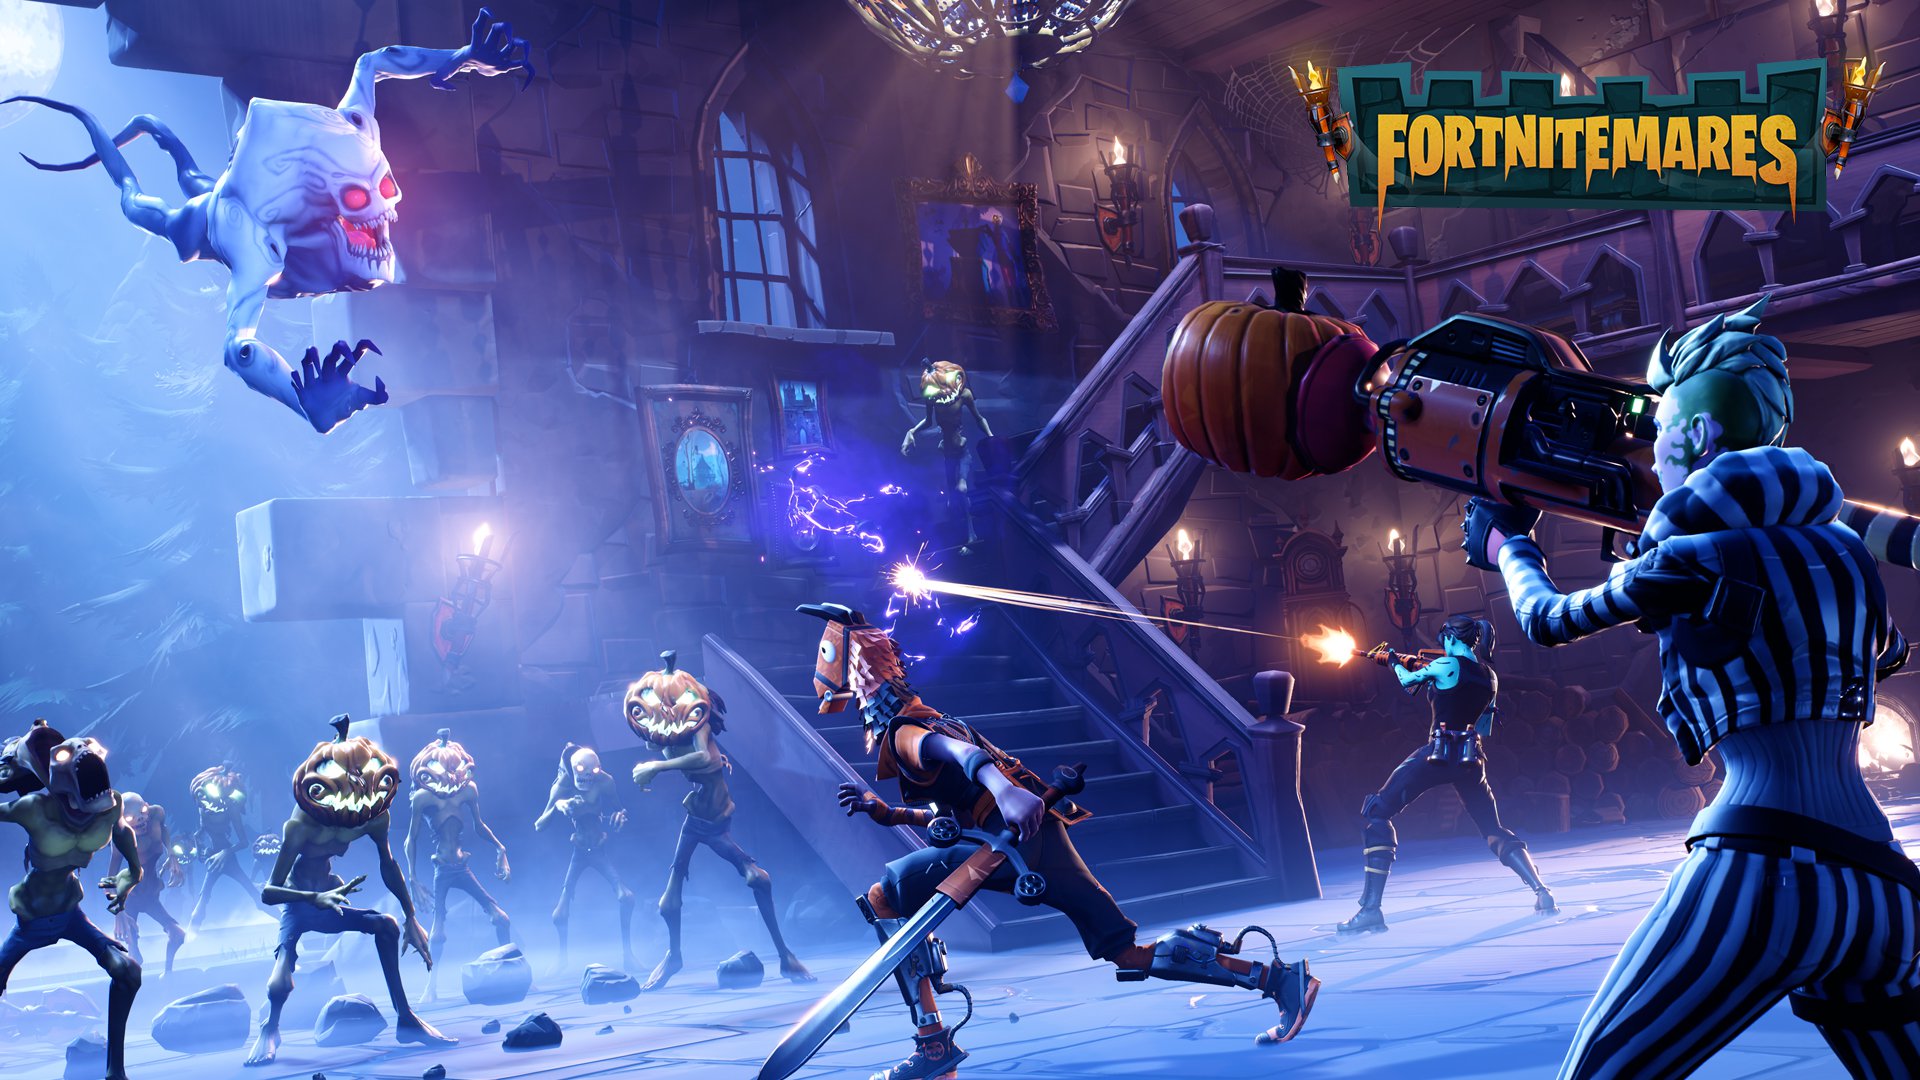 Fortnite Halloween Update Brings Festivities And Gameplay